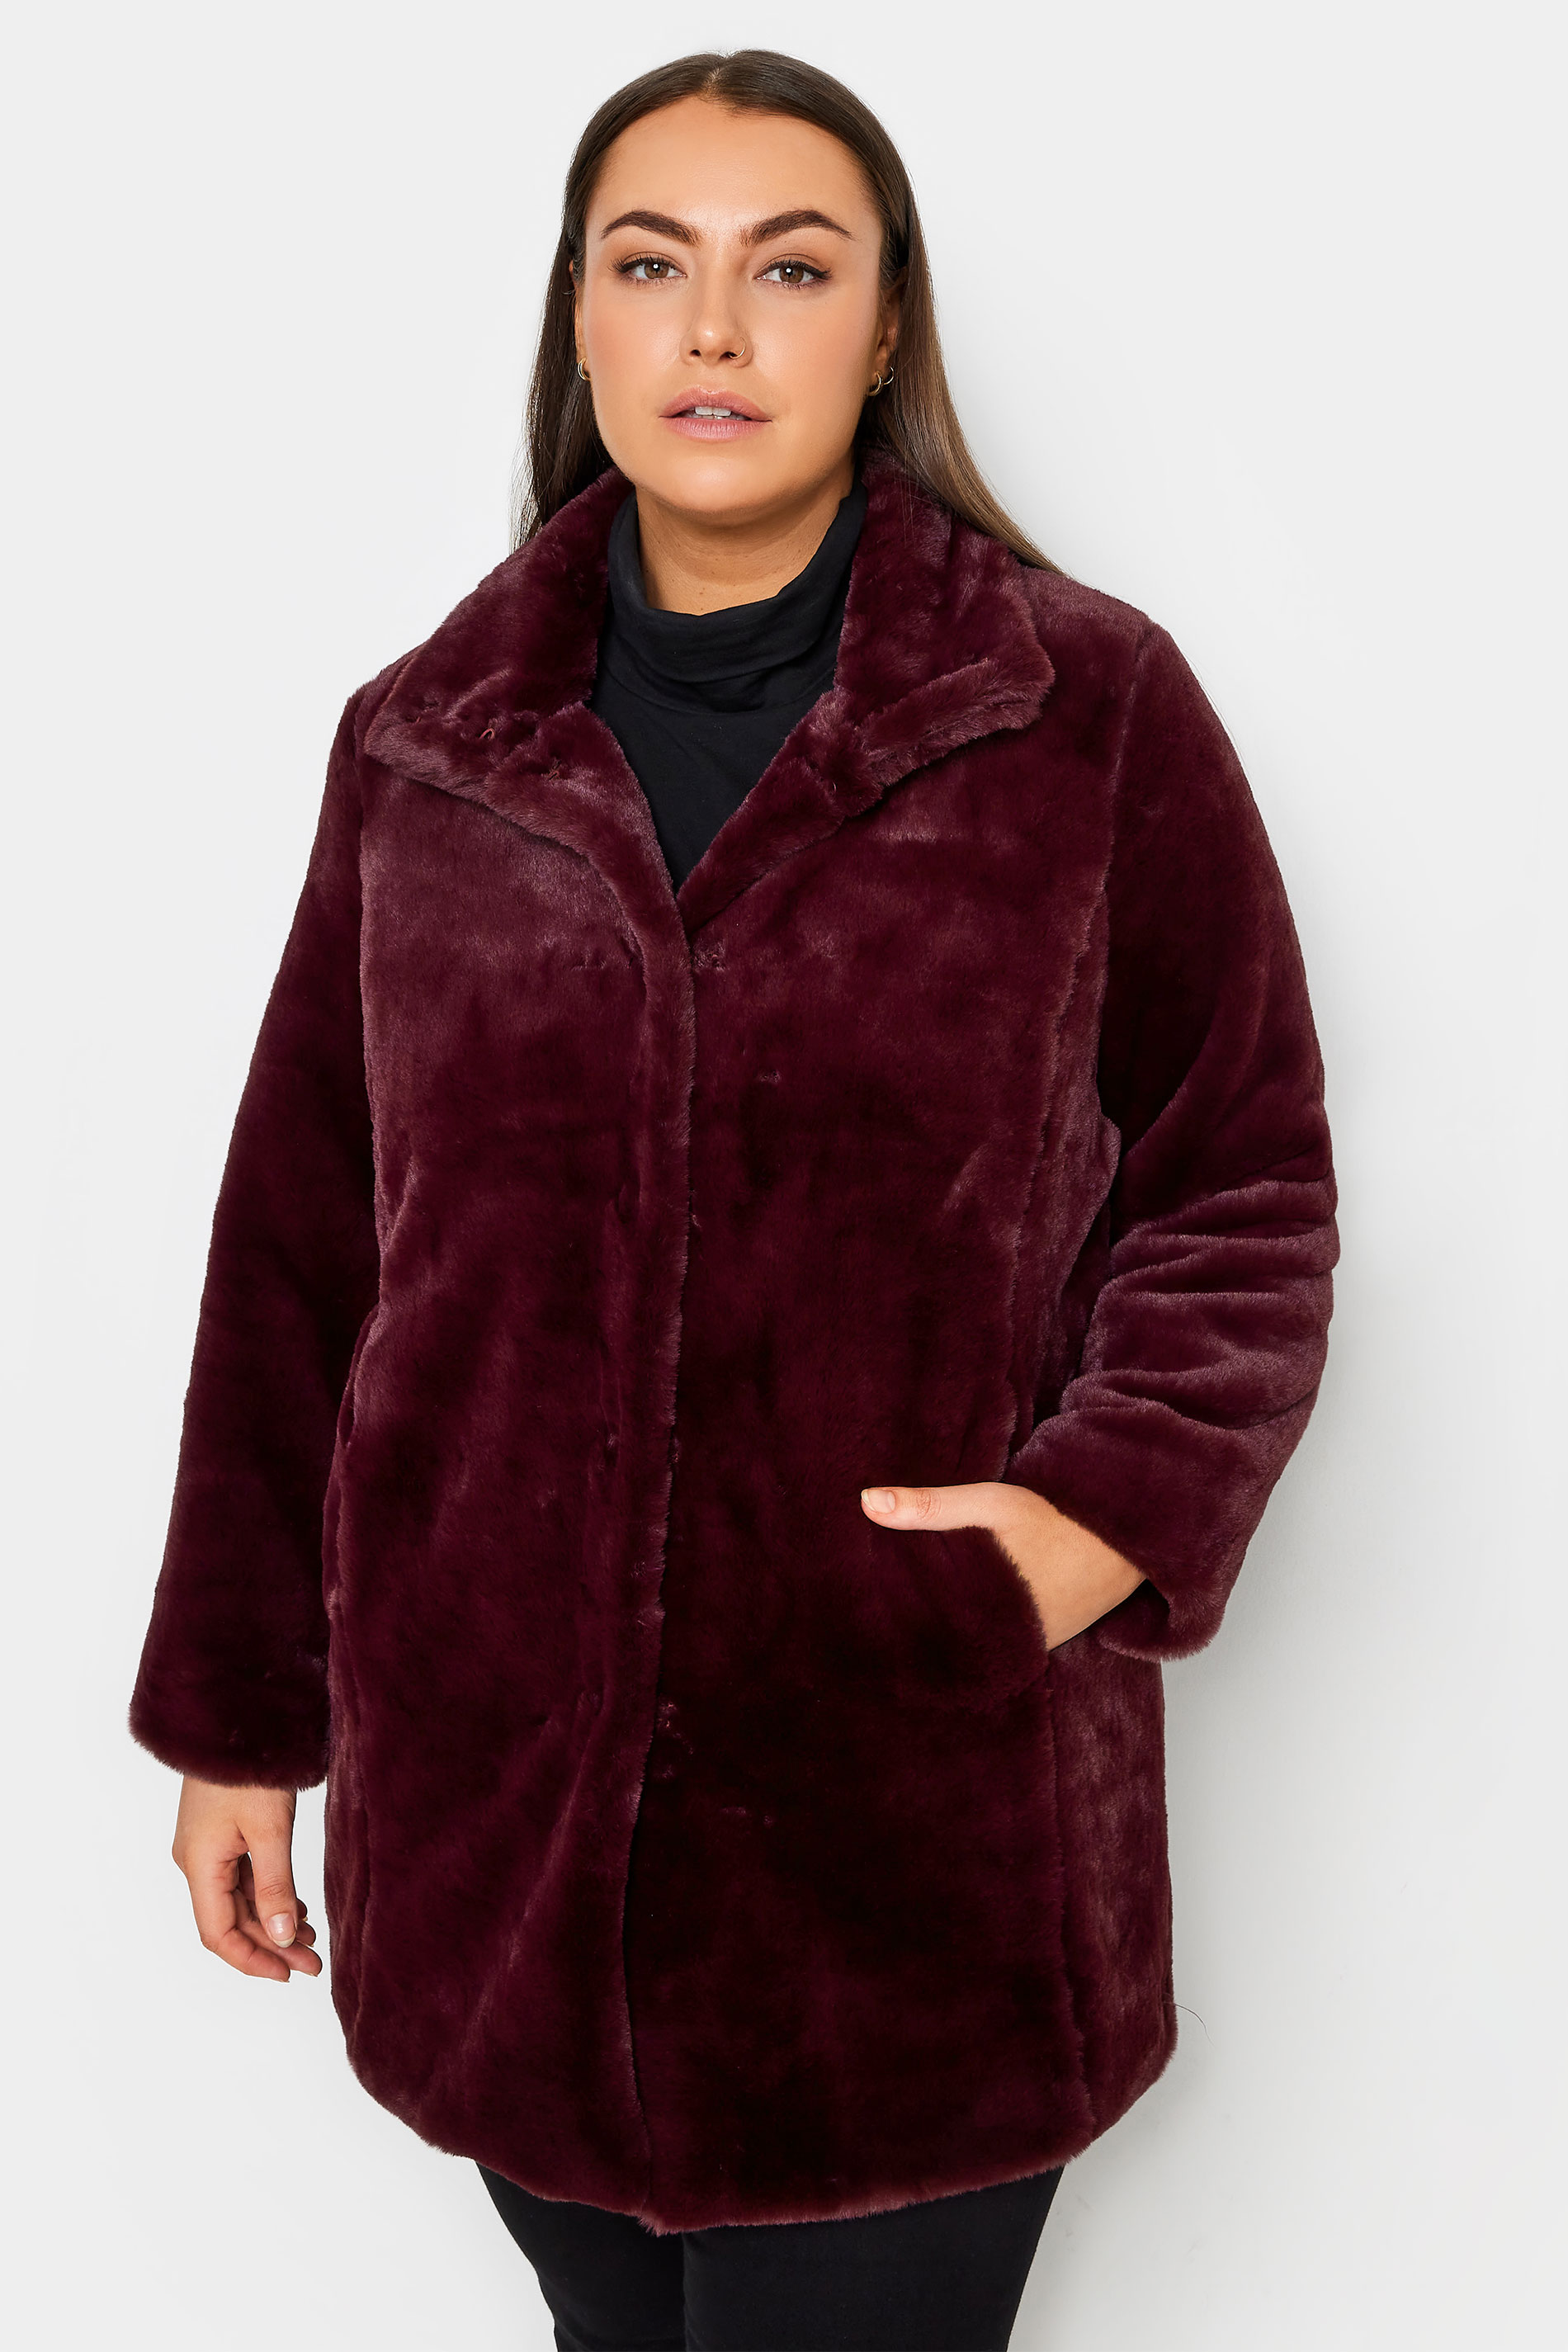 Evans Burgundy Red Faux Fur Coat | Evans 1